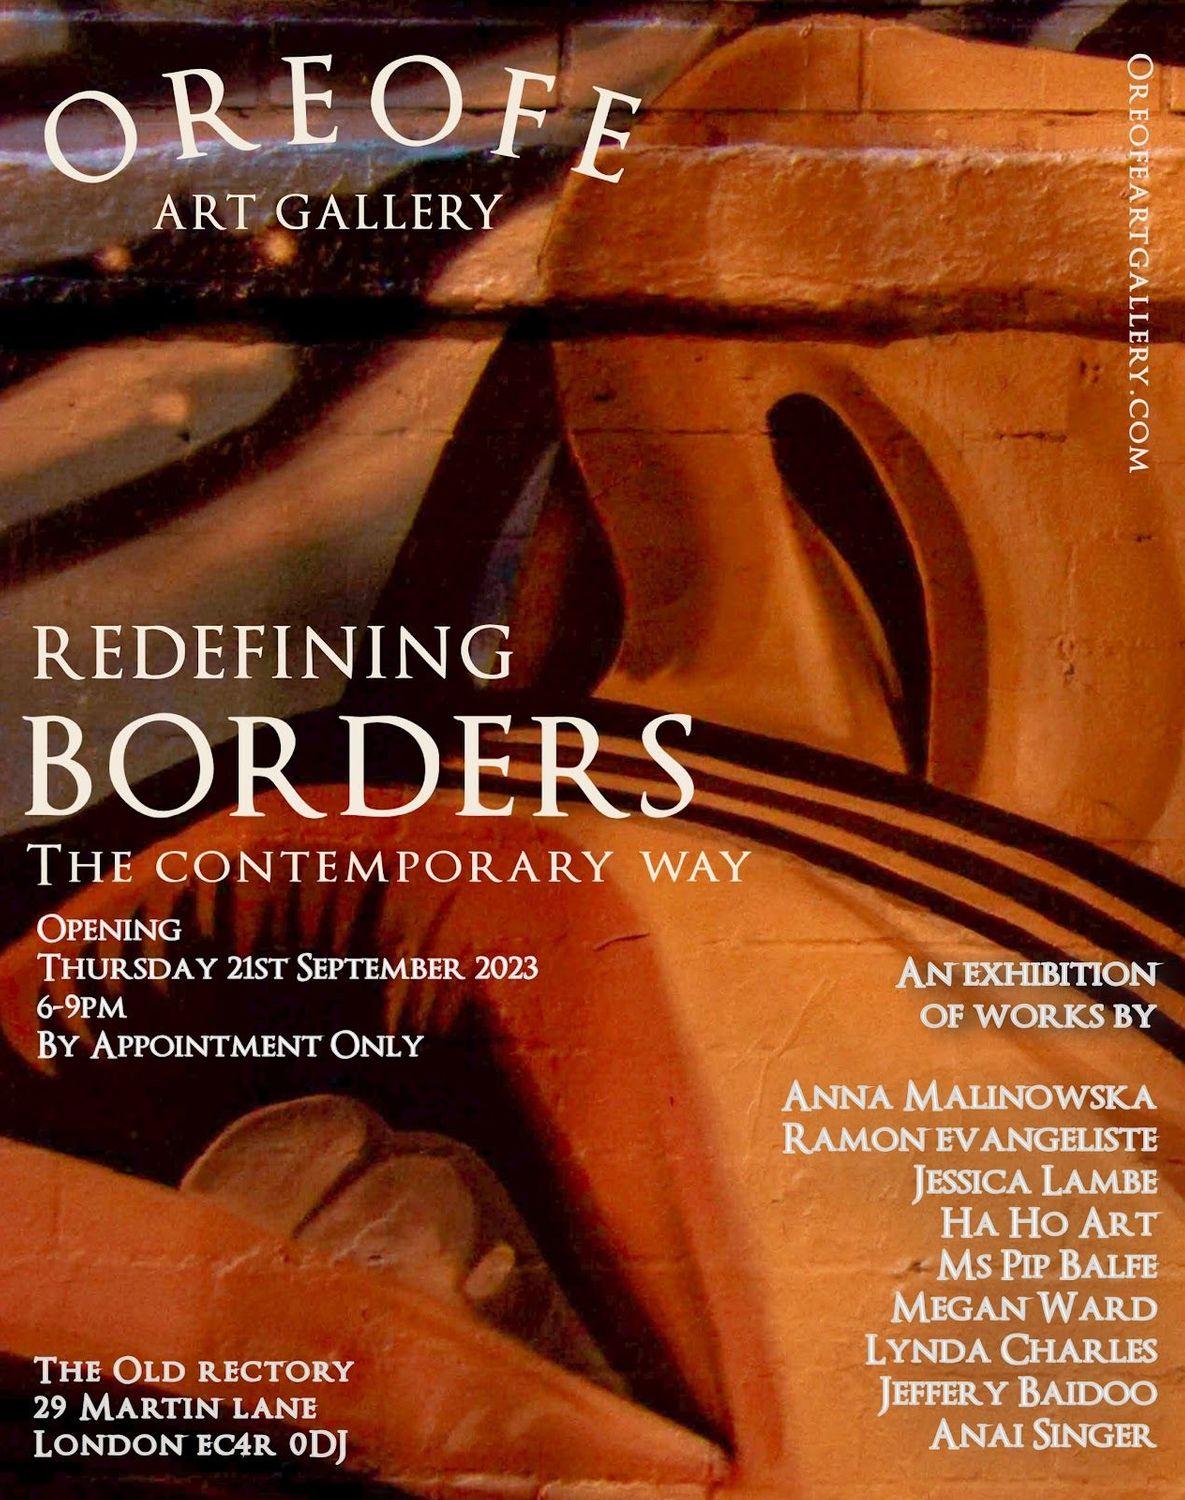 Redfining Borders: The Contemporary Way  | Anna Malinowska, Anai Singer, Jeffery Baidoo, Lynda Charles, Megan Ward, Ms Pip Balfe, Ha Ho Art, Ramon Evangeliste | Oreofe Art Gallery